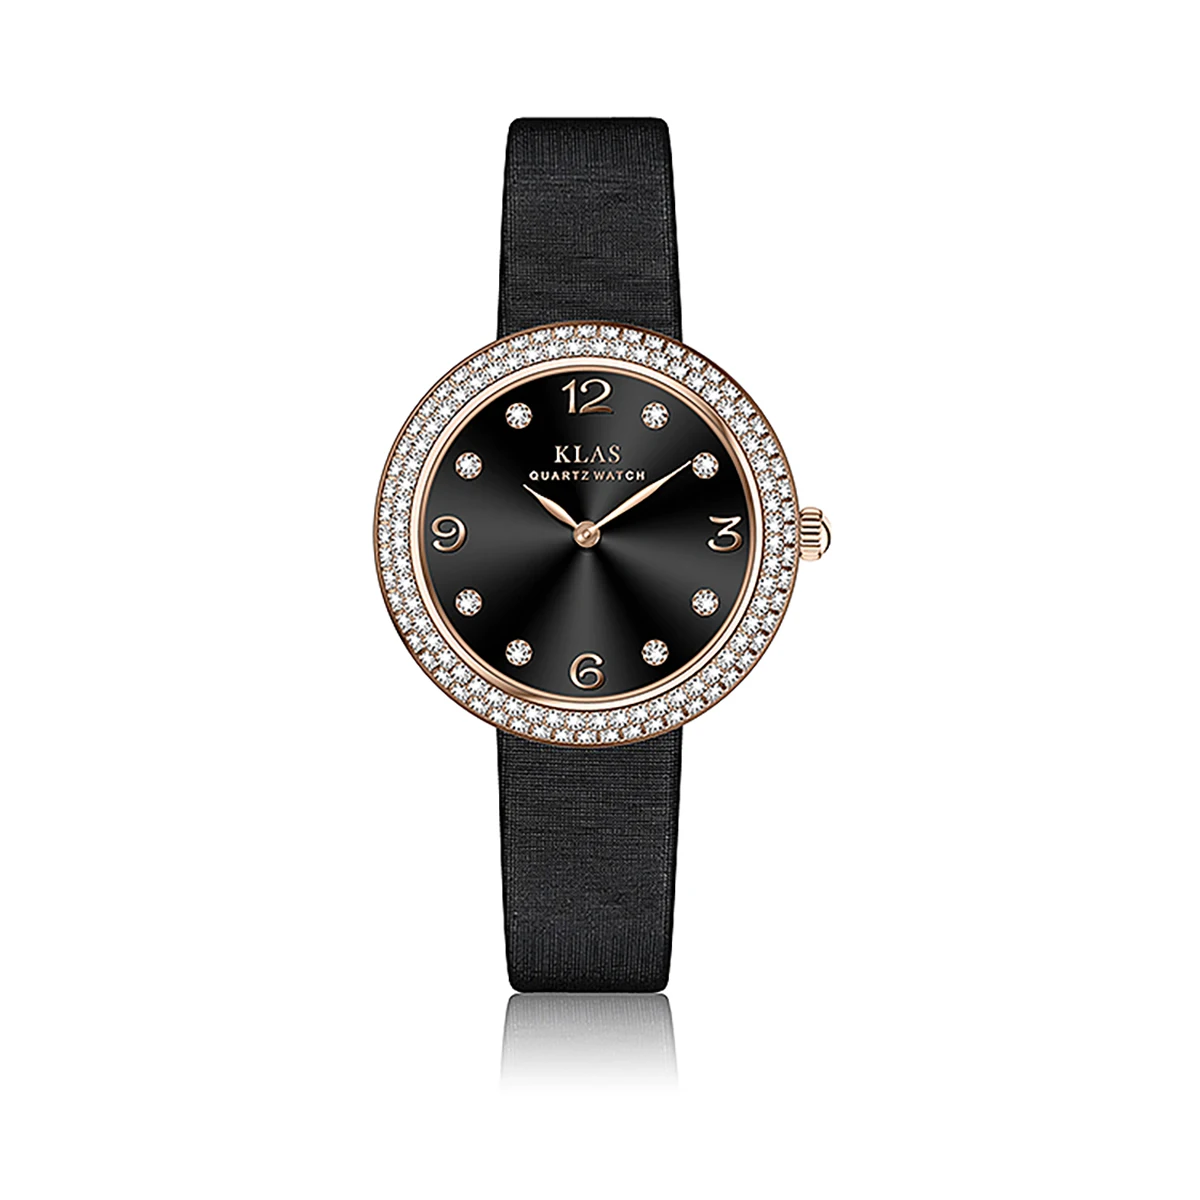 2021 Exquisite Luxury Business Wrist Watch Women's Ladies Gifts KLAS Brand